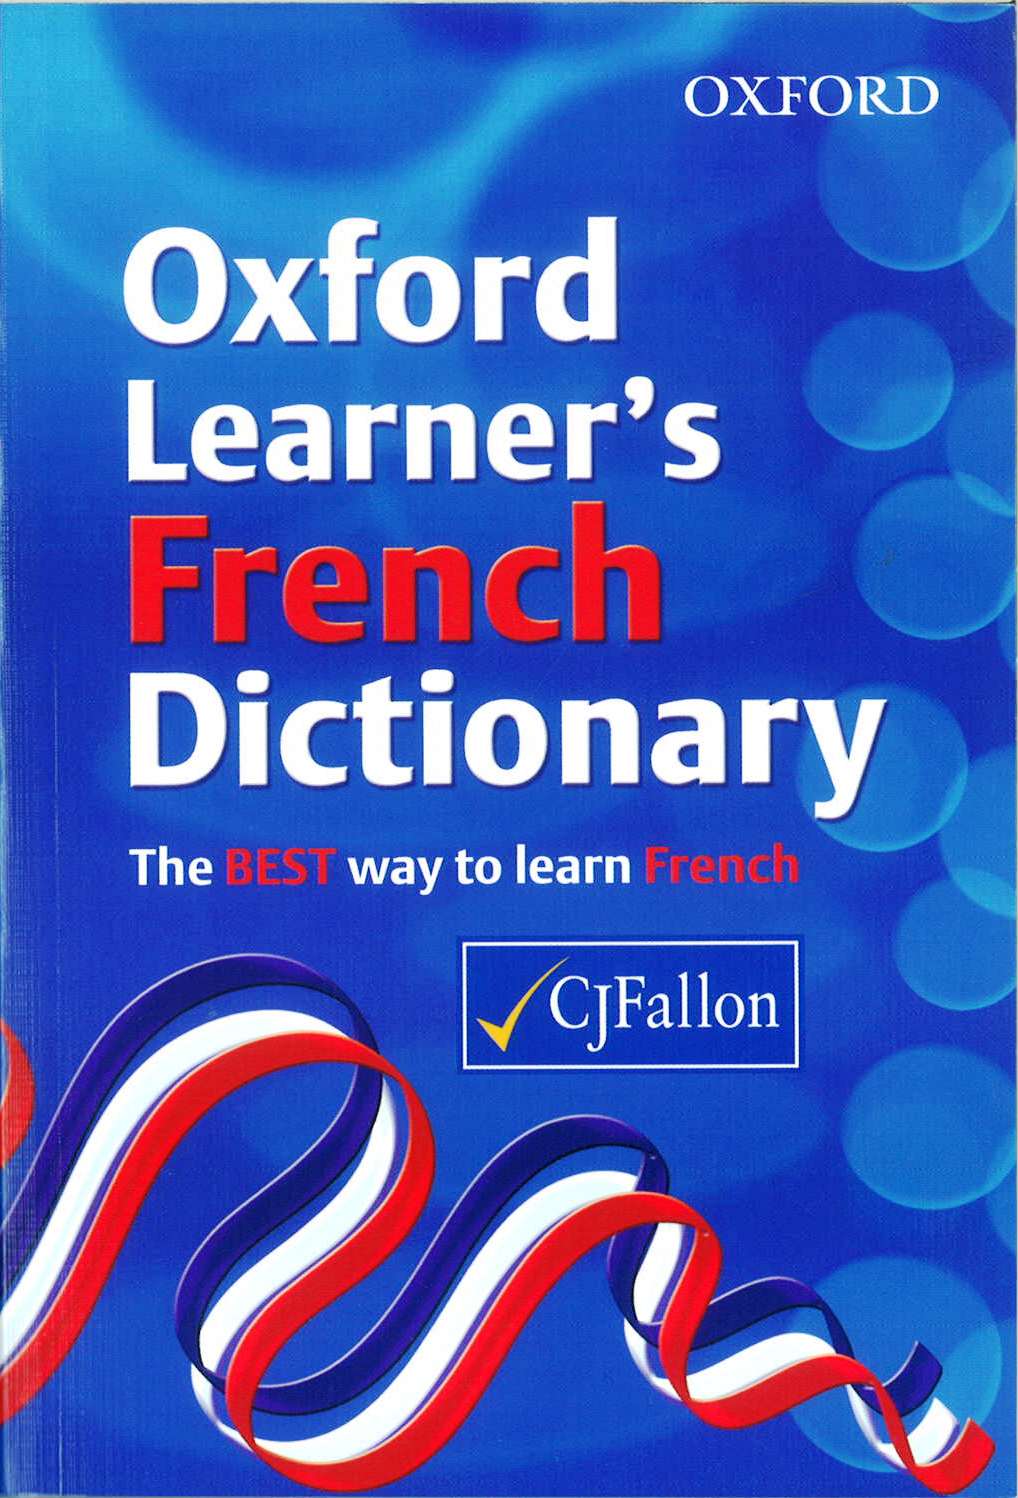 French dictionary. OCR Оксфорд. Macmillan English Dictionary for Advanced Learners книга. Словари французские Robert.